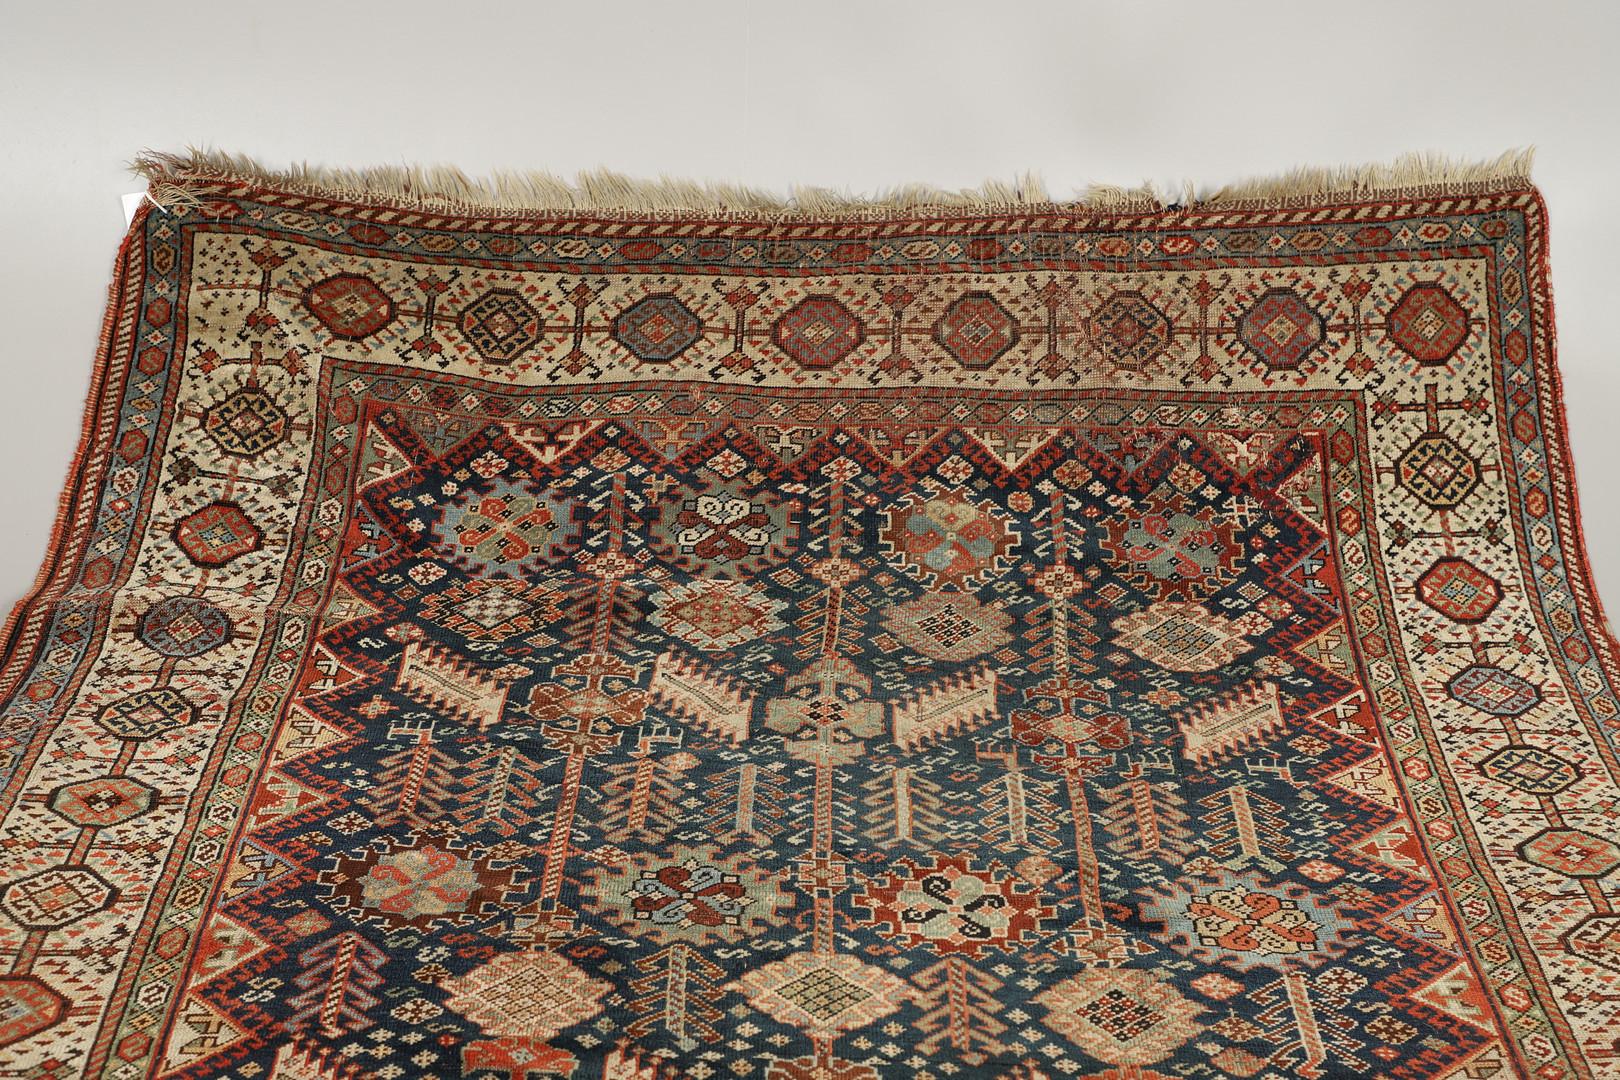 Fin du XIXe siècle Tapis ancien, tapis artisanal du Caucase oriental, tapis de salon en vente en vente